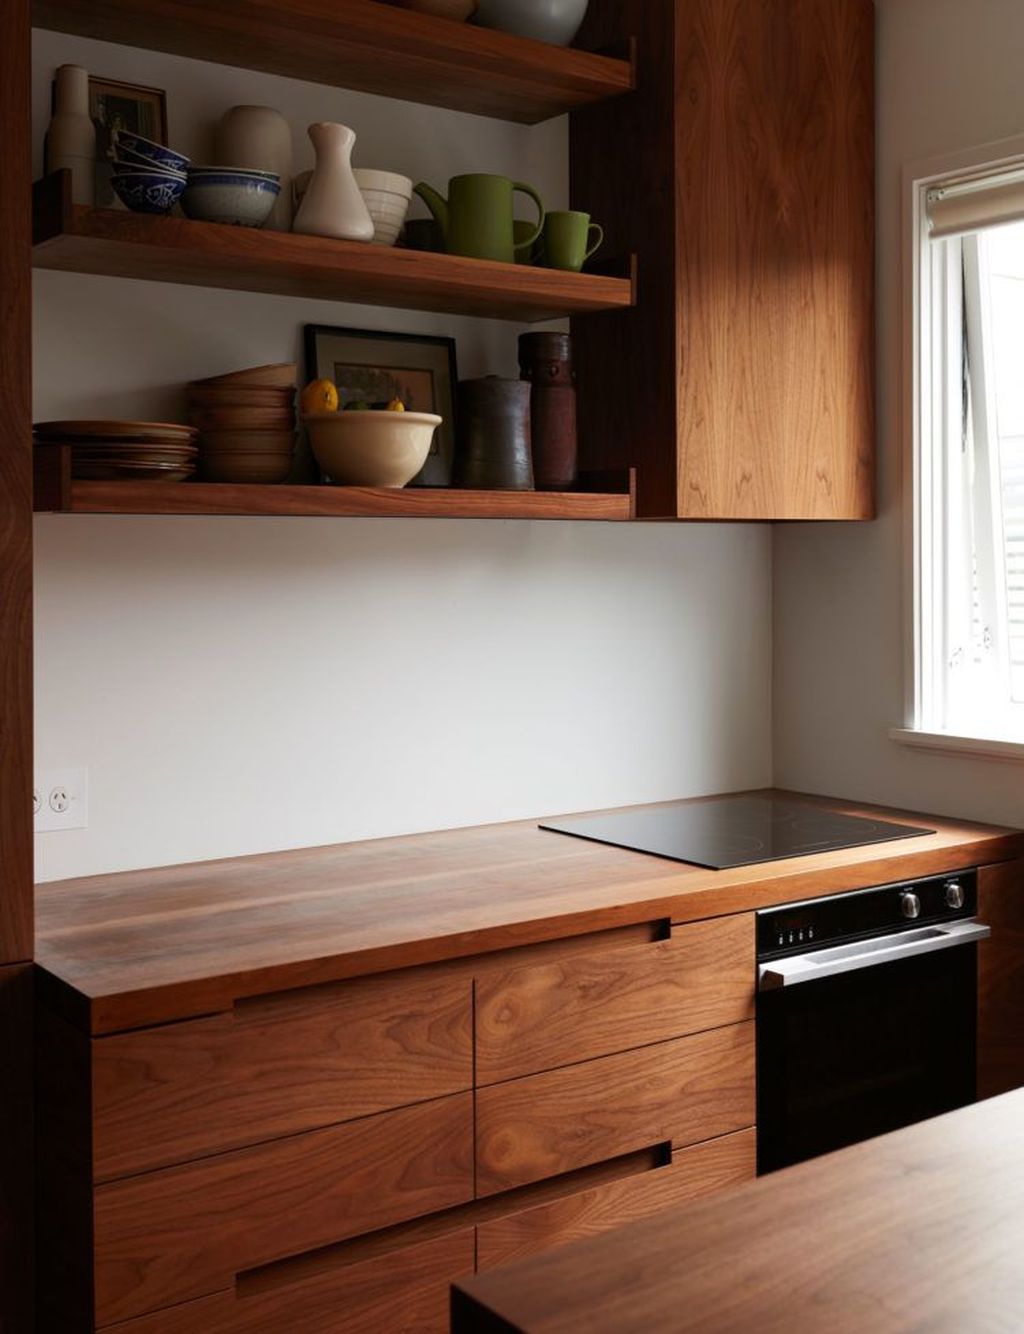 32 Popular Apartment Kitchen Design Ideas You Should Copy - PIMPHOMEE